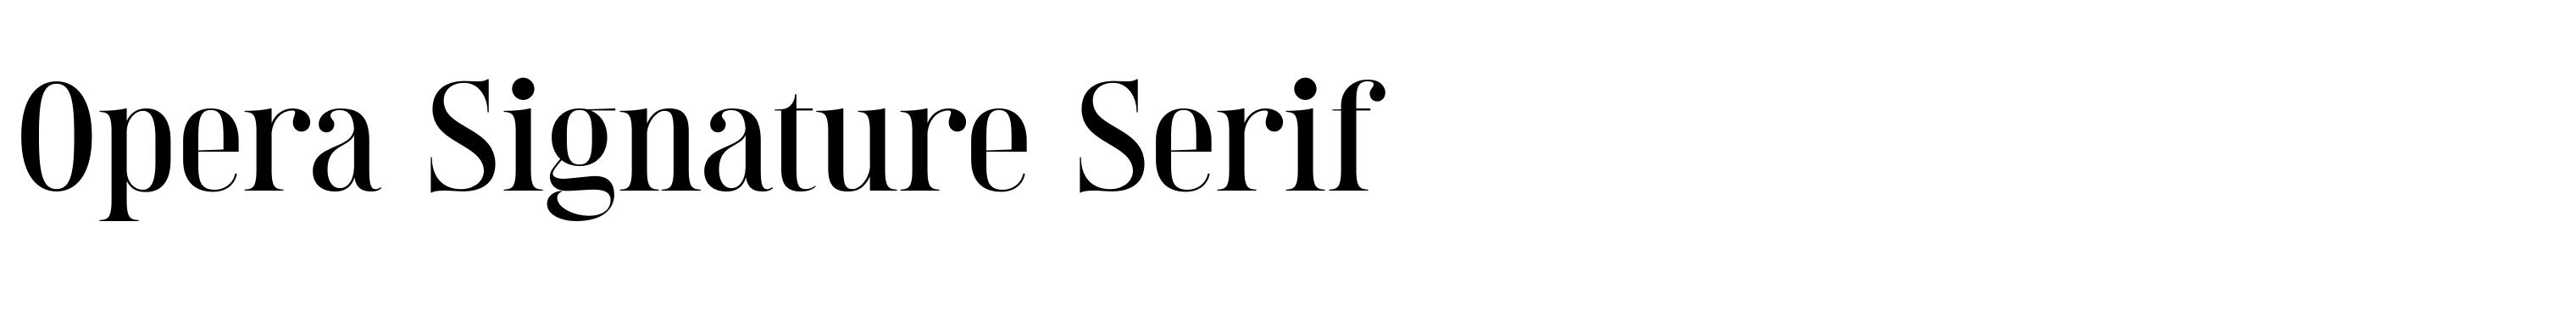 Opera Signature Serif